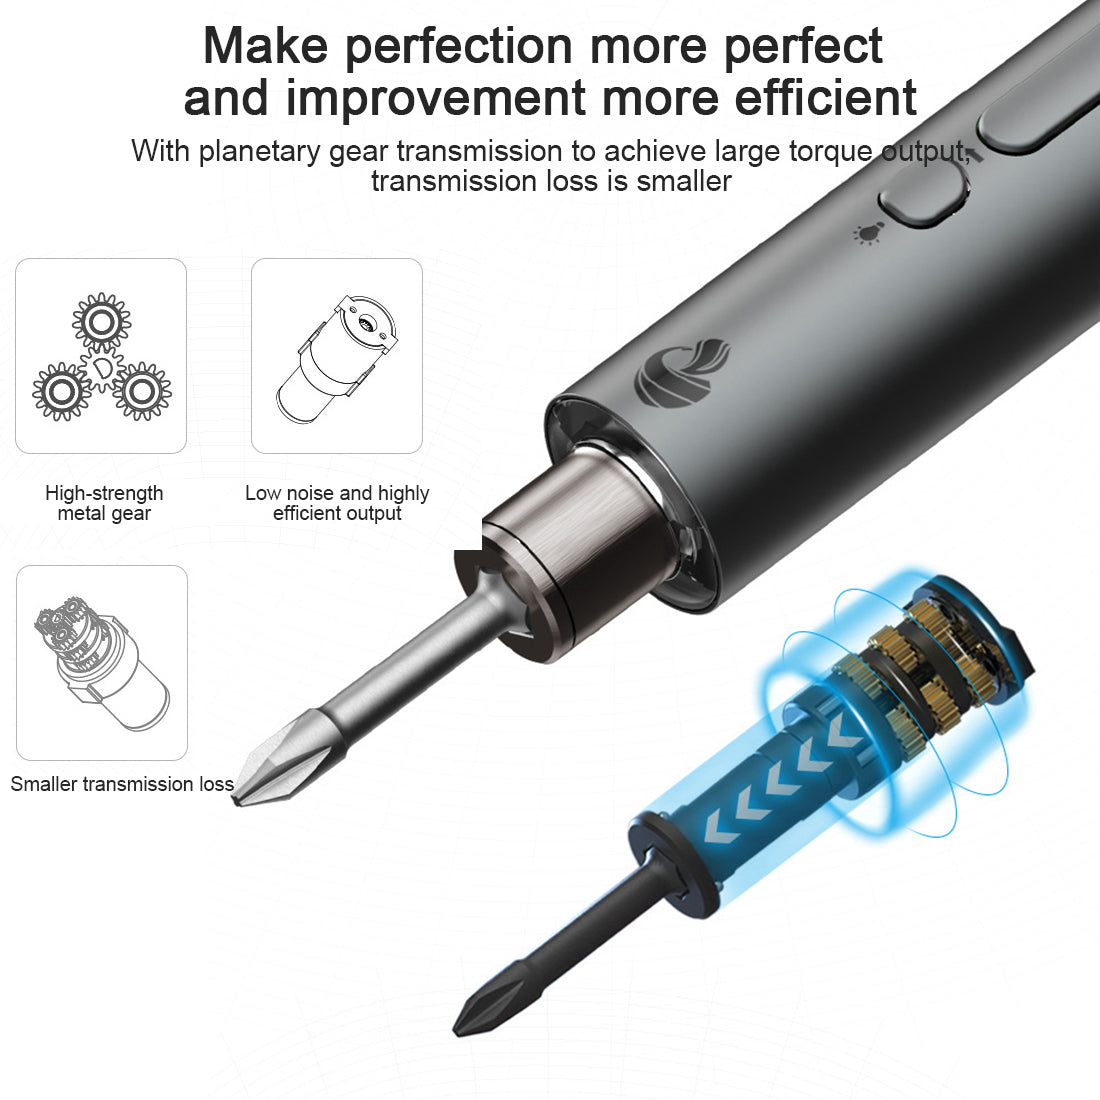 Mini Precision Electric Screwdriver Essential Metal Model Kits Tools K